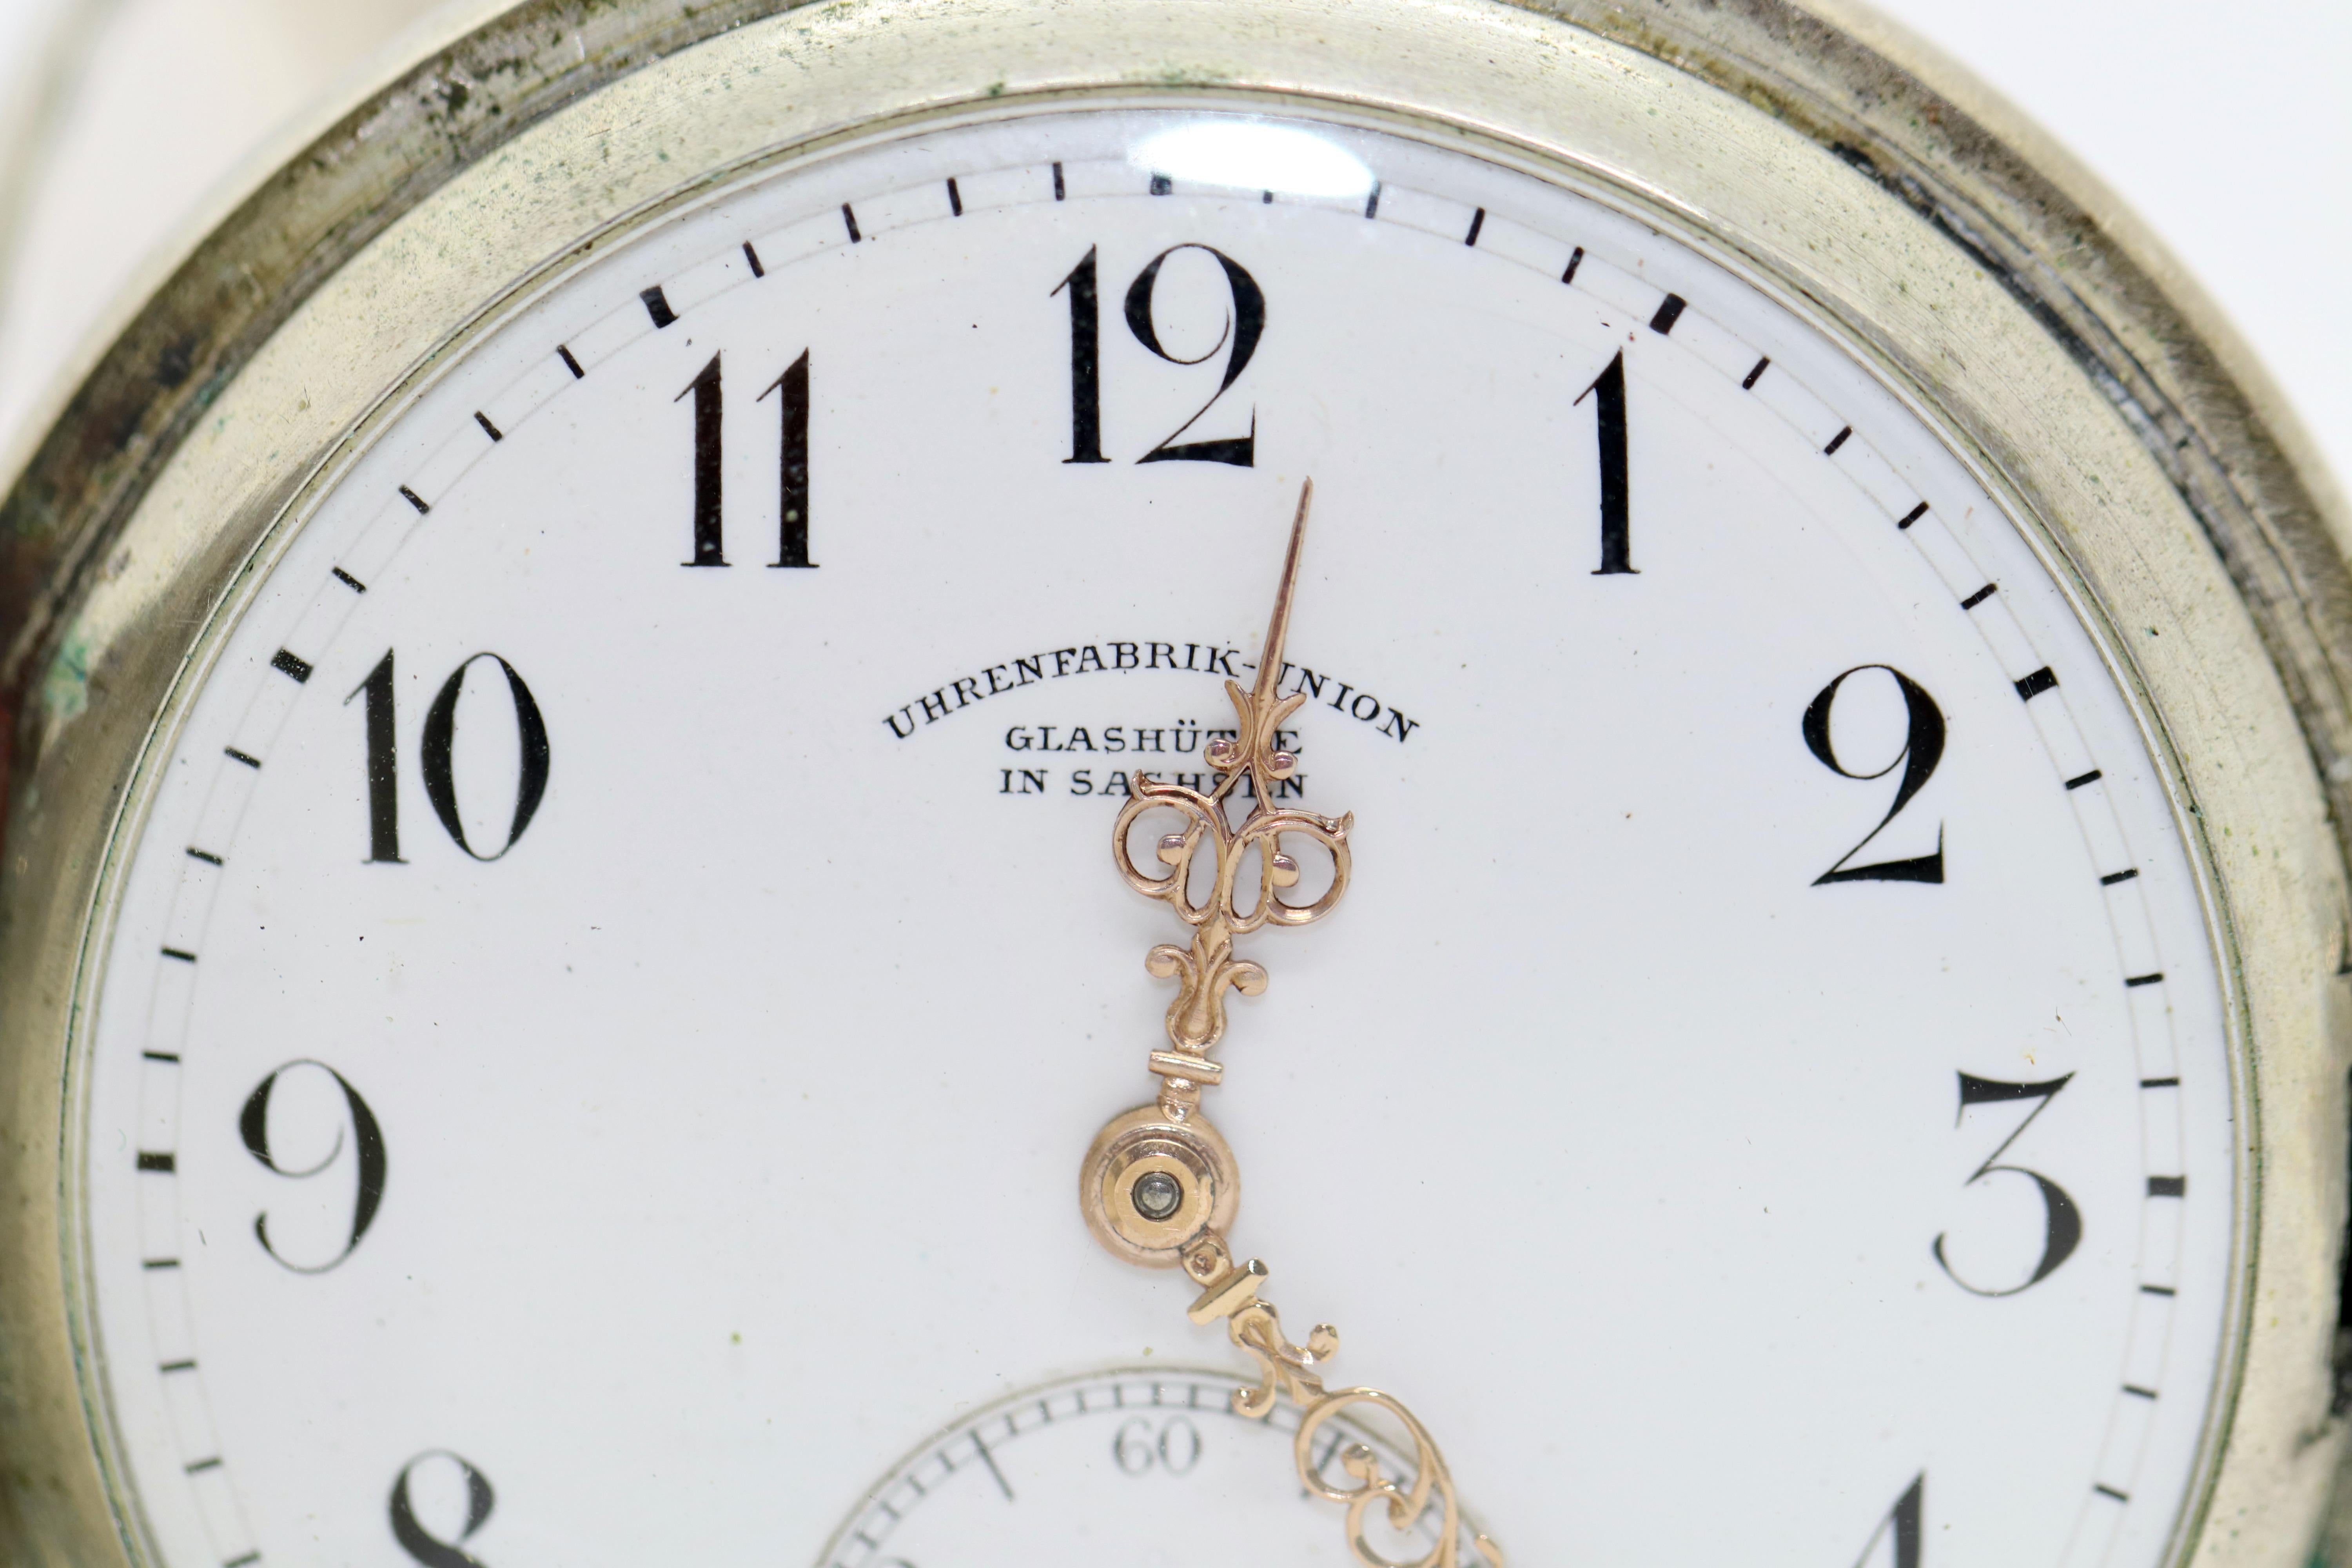 Glashütte Uhrenfabrik Union Silver Pocket Watch, Case by Dürrstein & Co. In Fair Condition For Sale In Berlin, DE